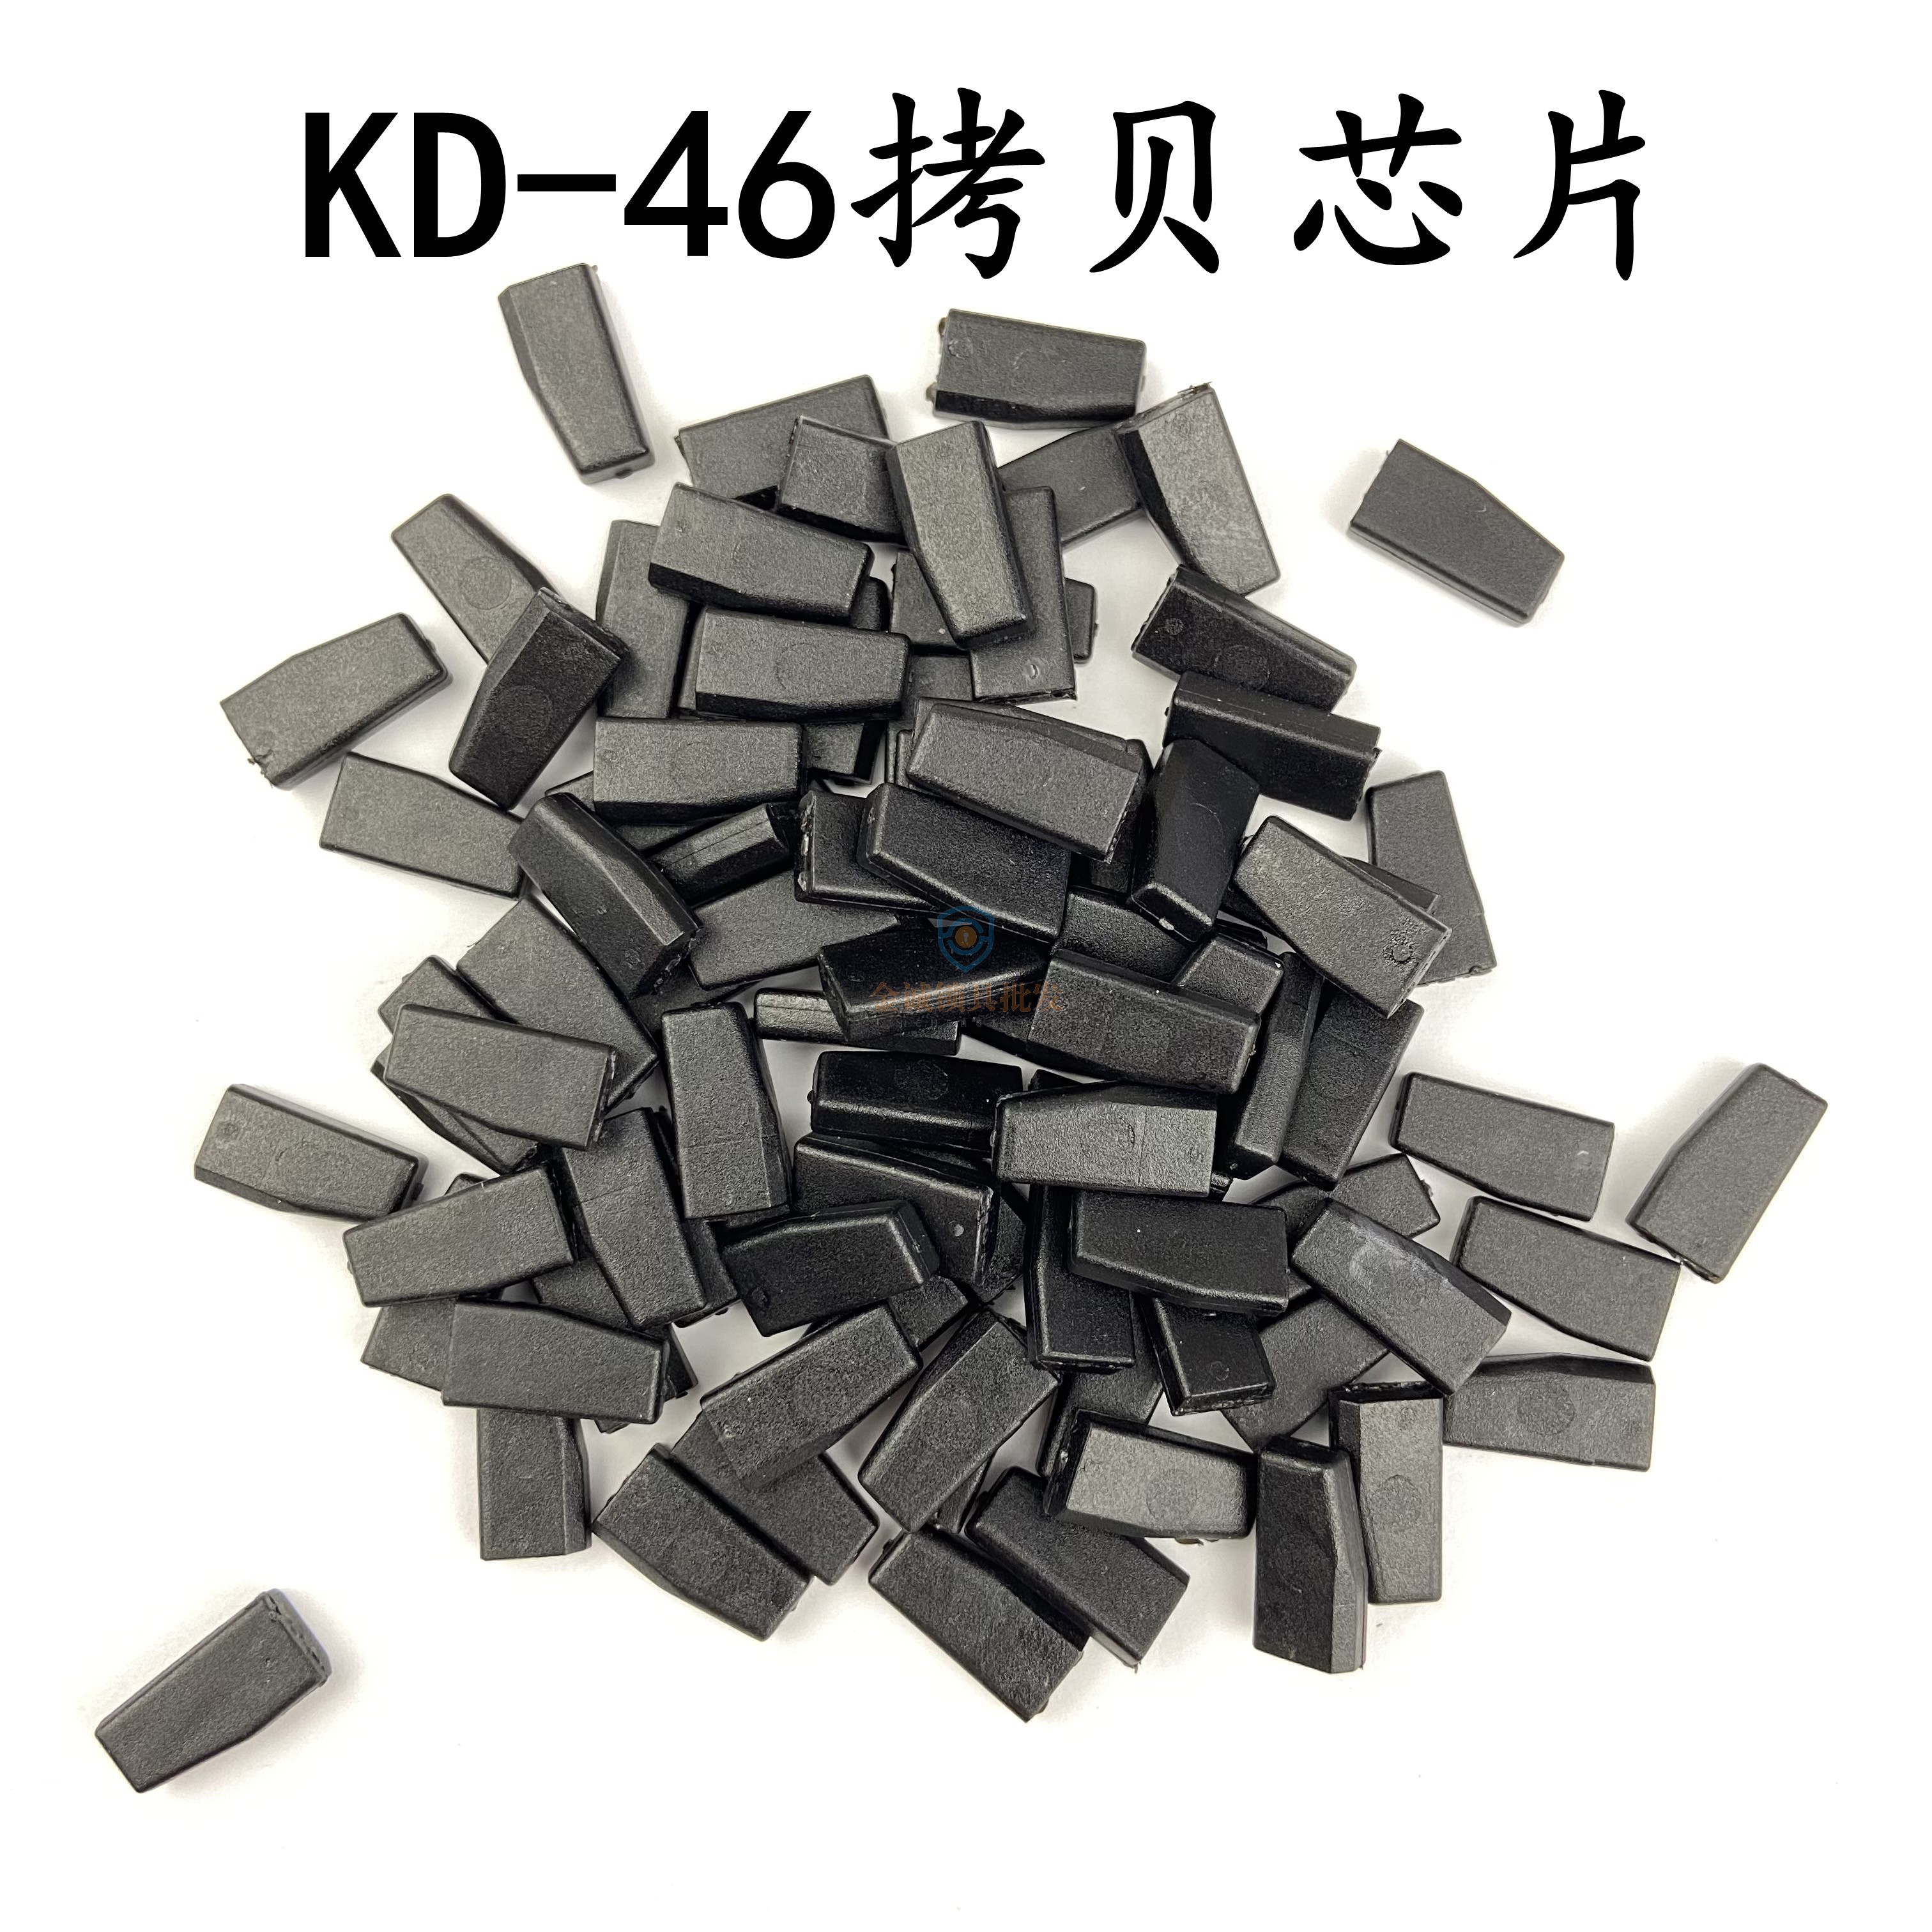 KD拷贝芯片 KD46拷贝芯片 KD4D拷贝芯片 KD46 48 4DG专用拷贝芯片 - 图3